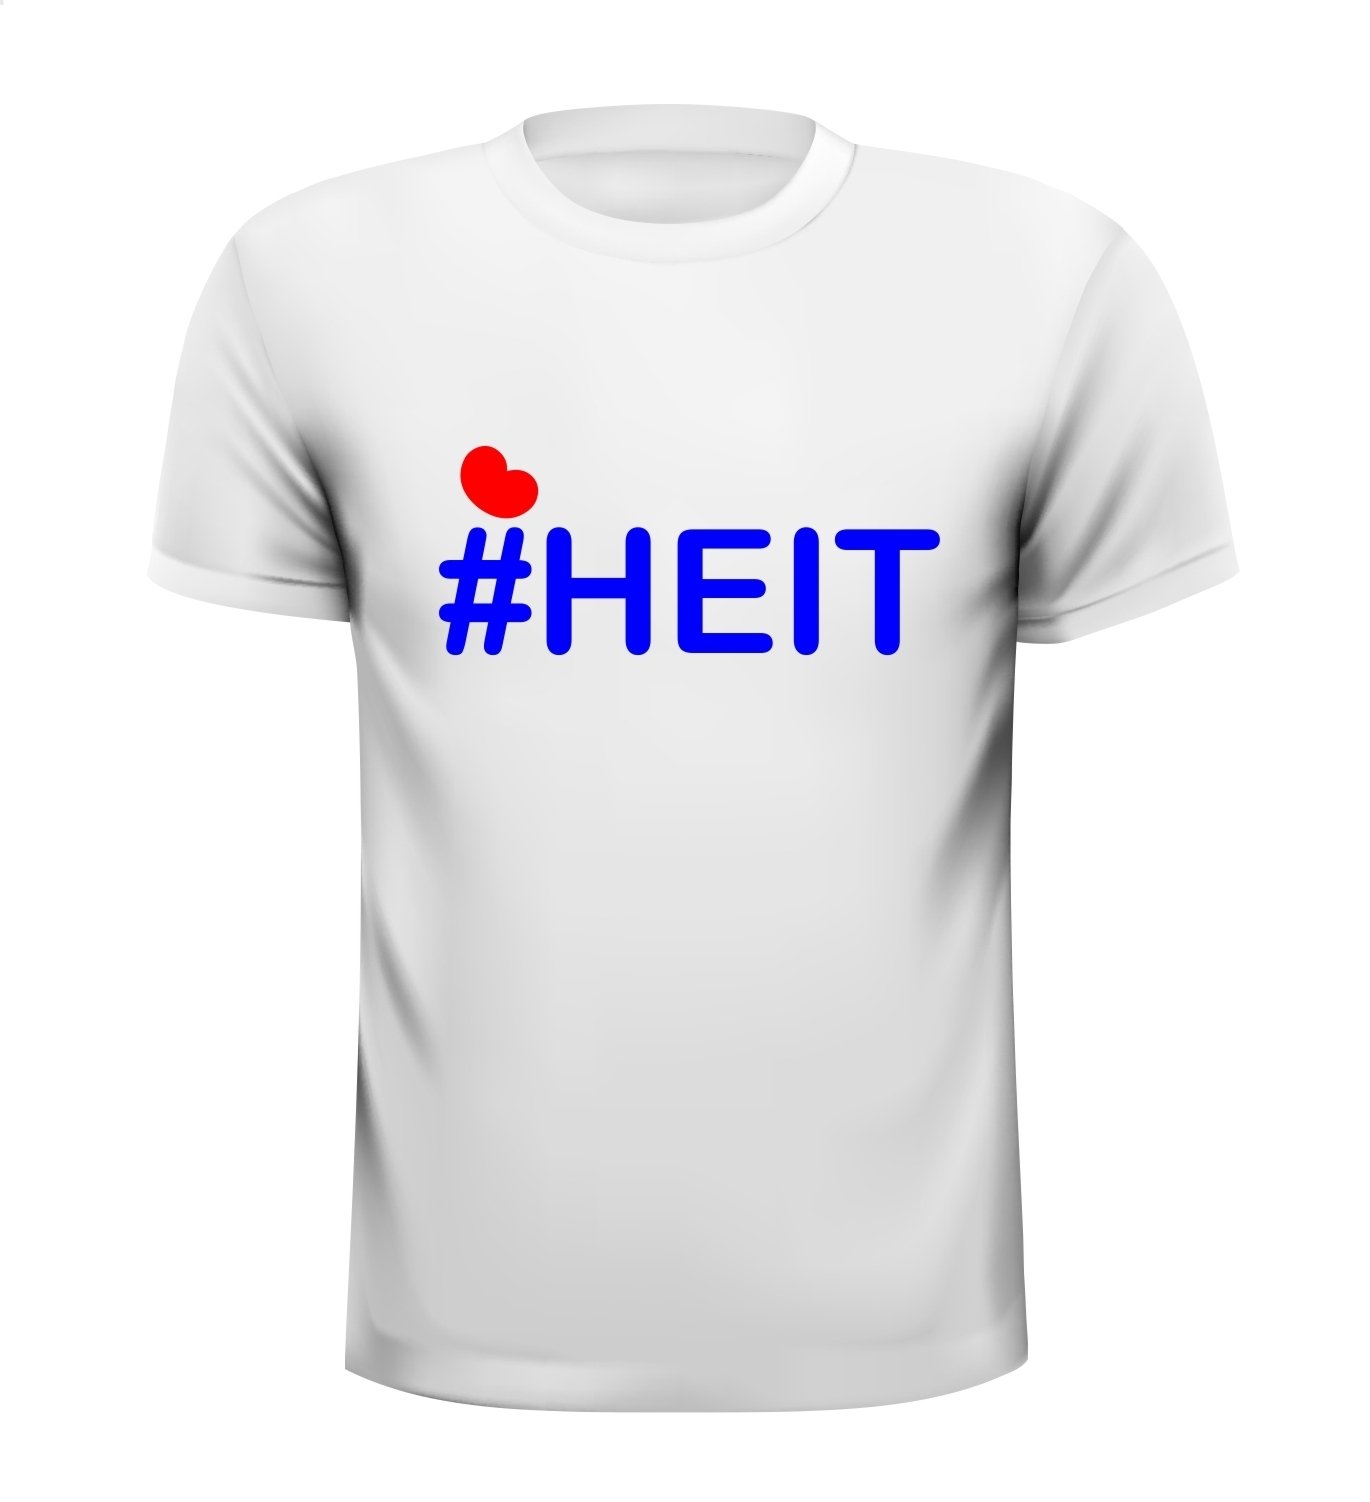 hashtag heit T-shirt